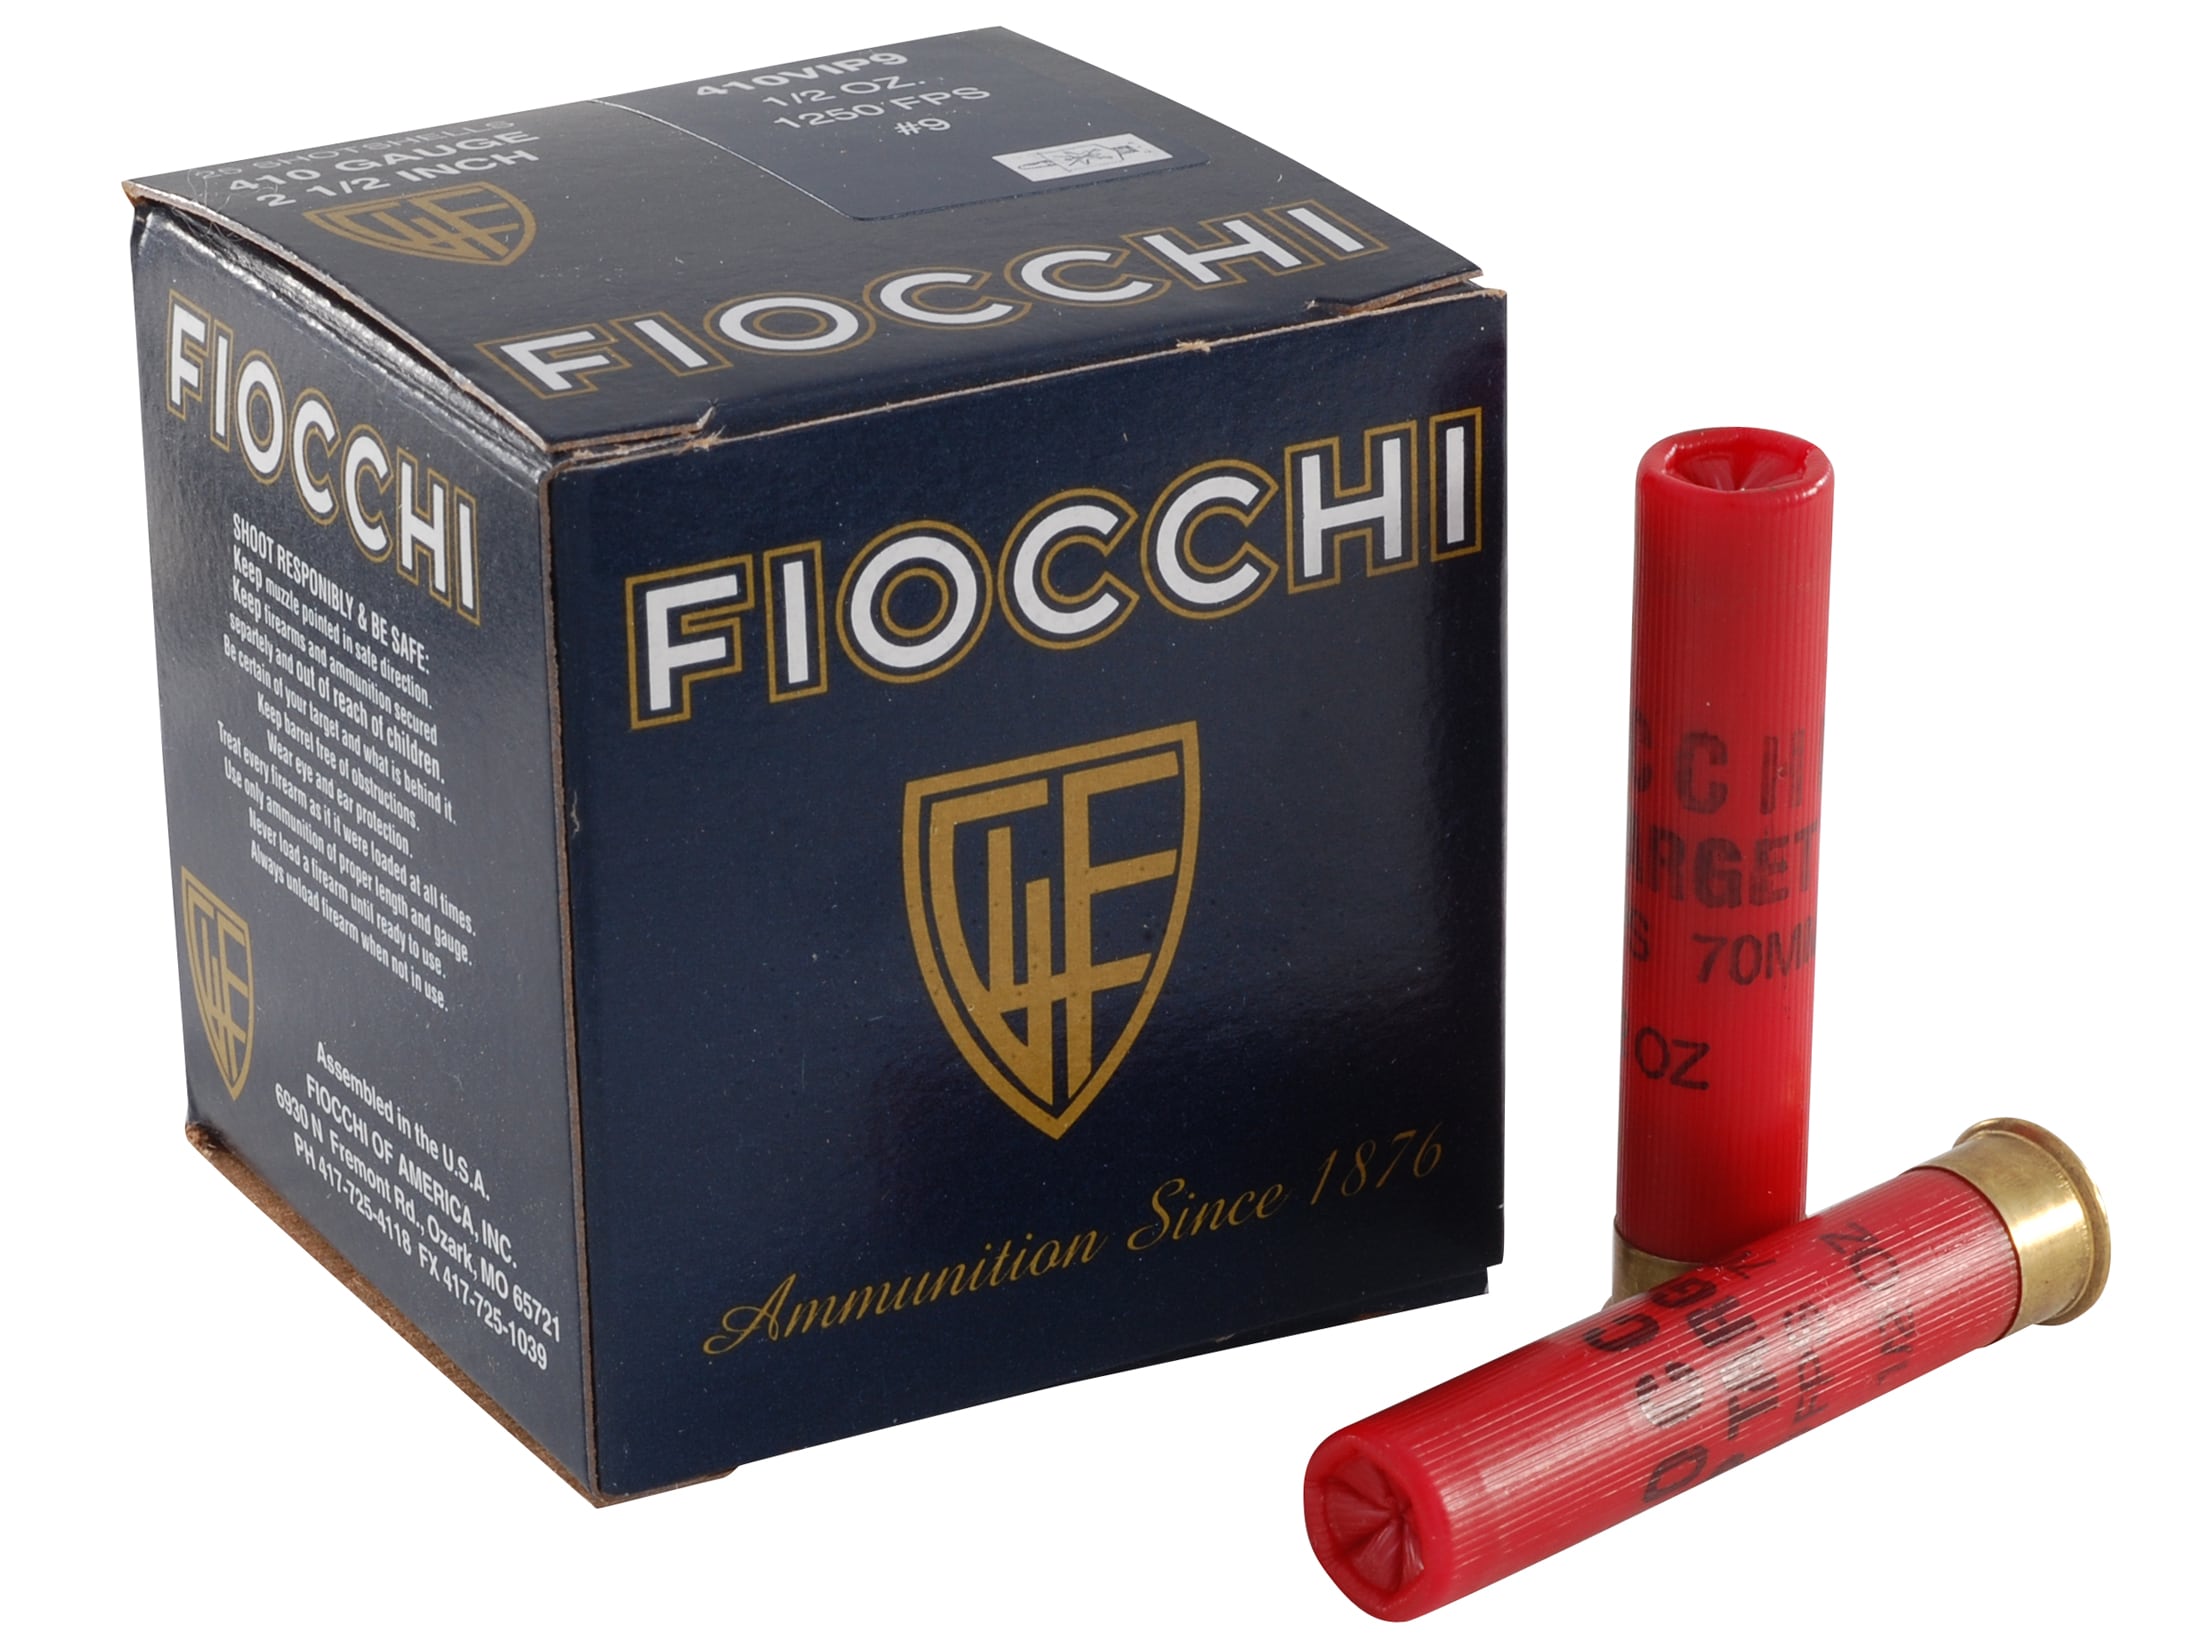 Fiocchi Exacta Target Ammo 410 Bore 2-1/2 1/2oz #9 Shot Box of 25.